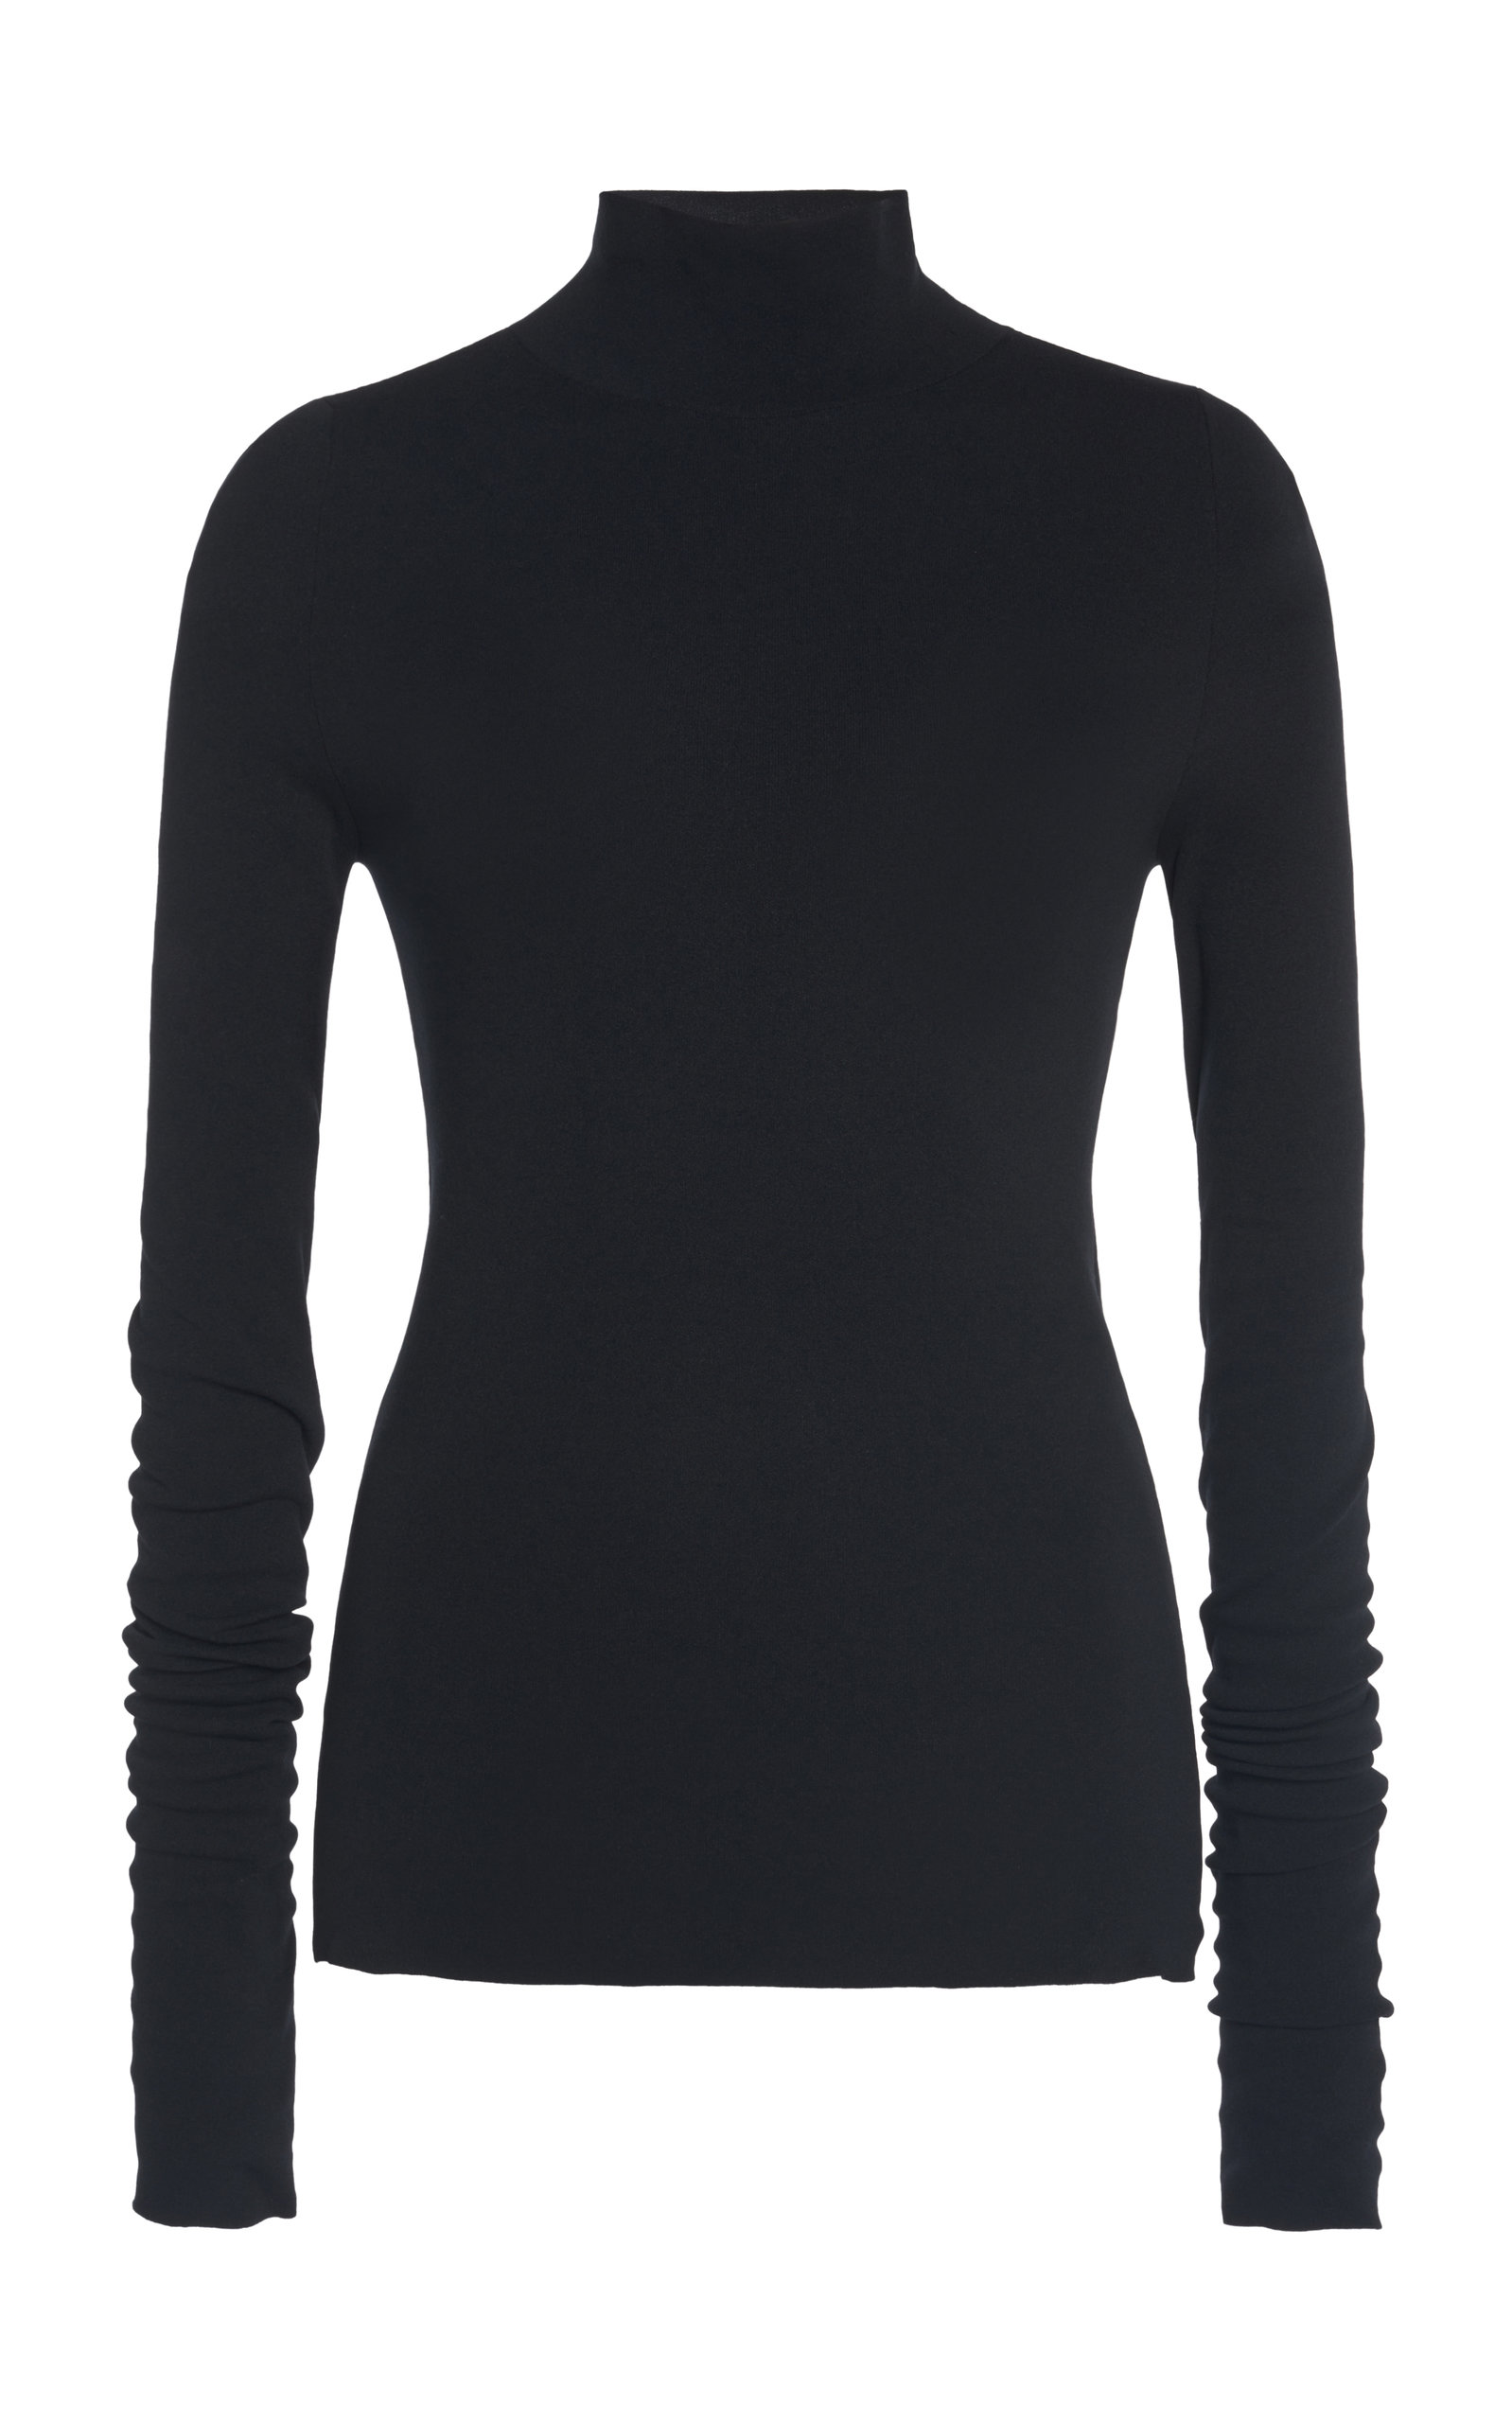 Balenciaga - Stretch-Knit Turtleneck Top - Black - L - Moda Operandi